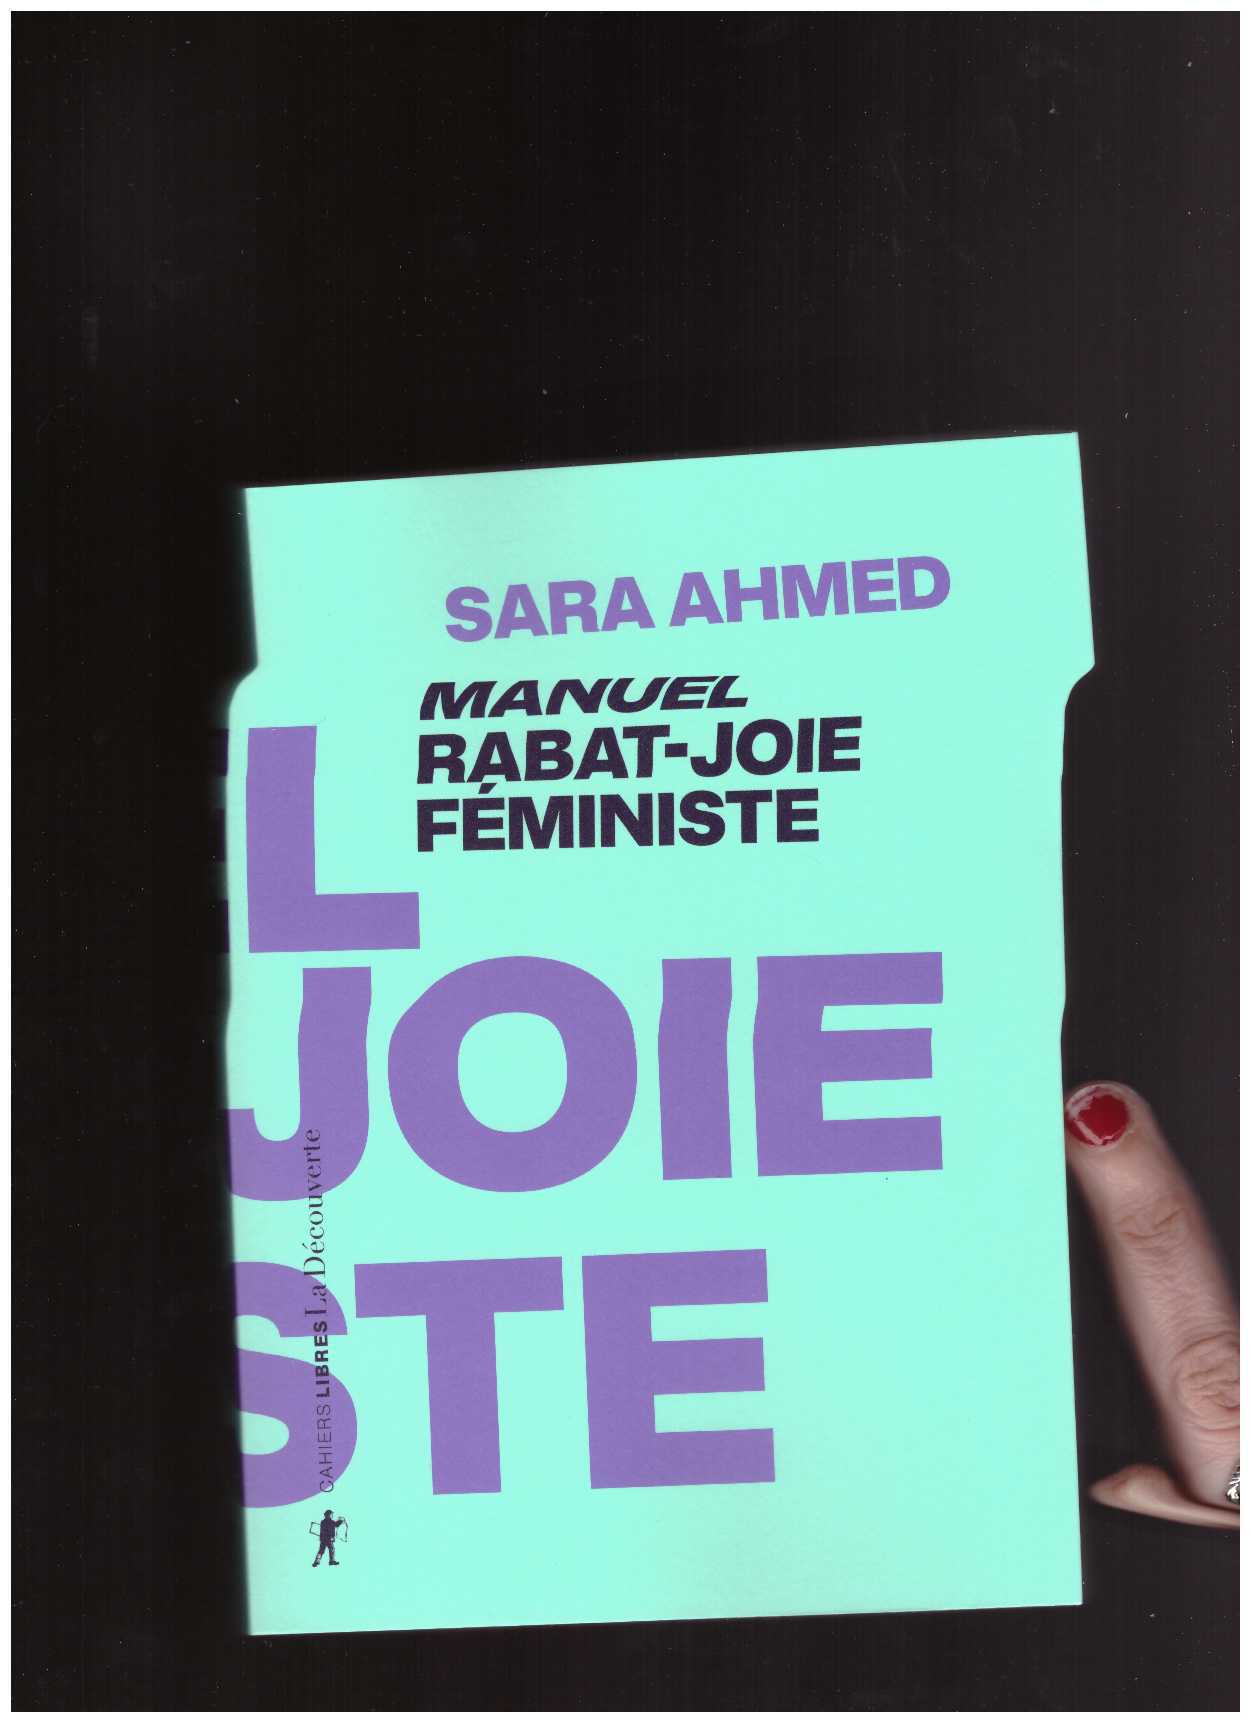 AHMED, Sara - Manuel rabat-joie féministe